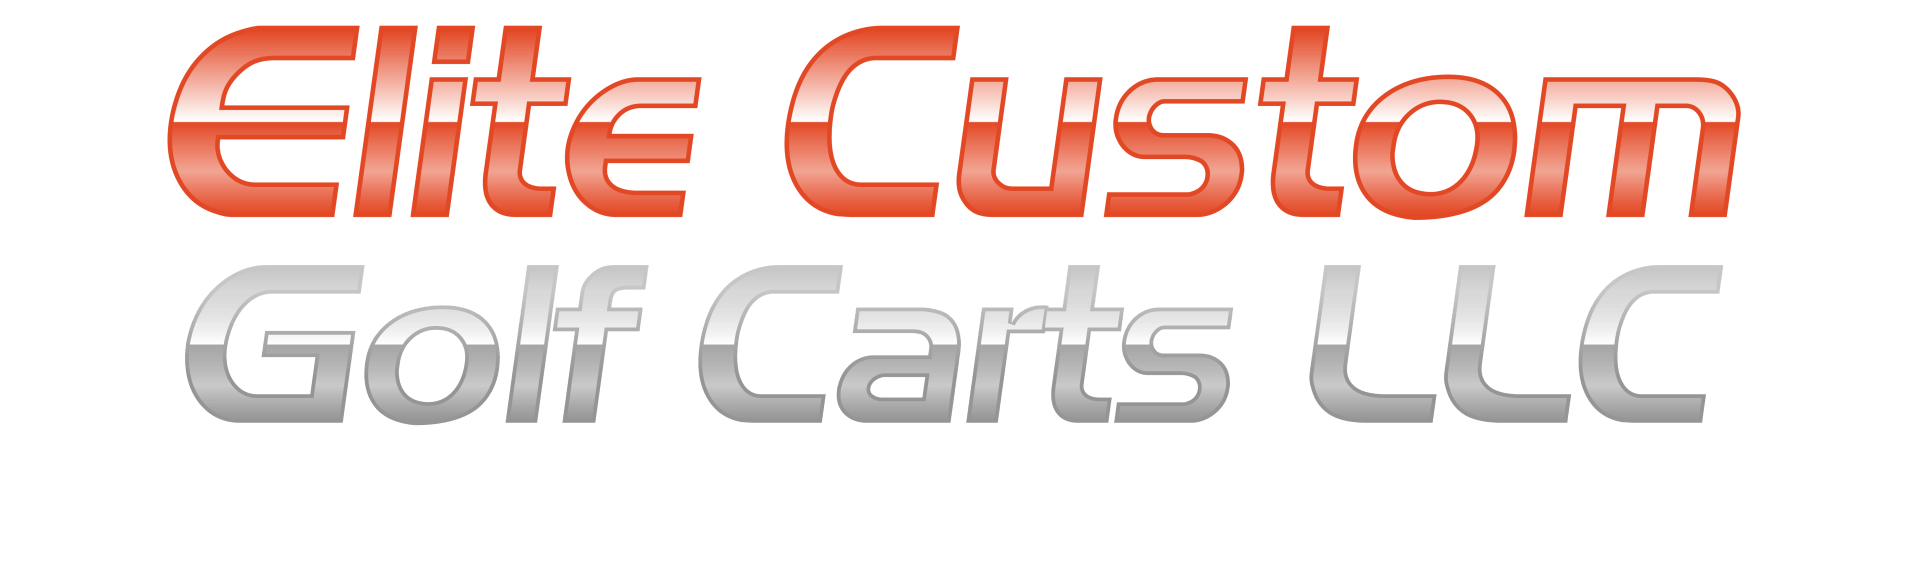 Elite Custom Golf Carts logo